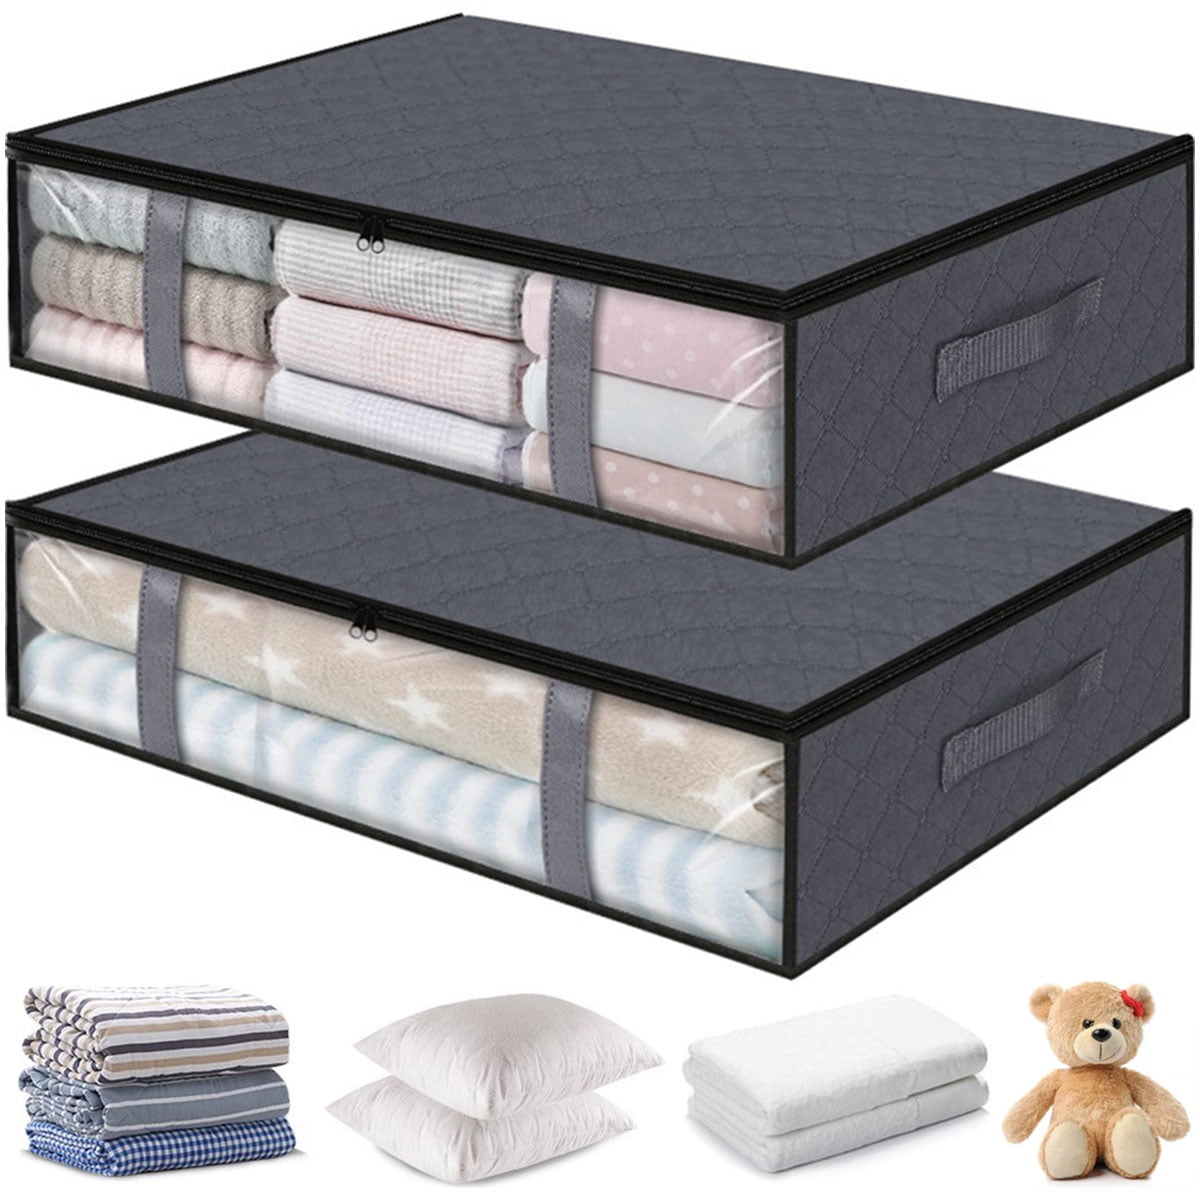 Under Bed Storage Tall Storage Bins 30 x 36 x 12 Blanket Storage Large Cotton Bag Printing Canvas Baby Clothes Under Storage Bins Under Bed Under Bed